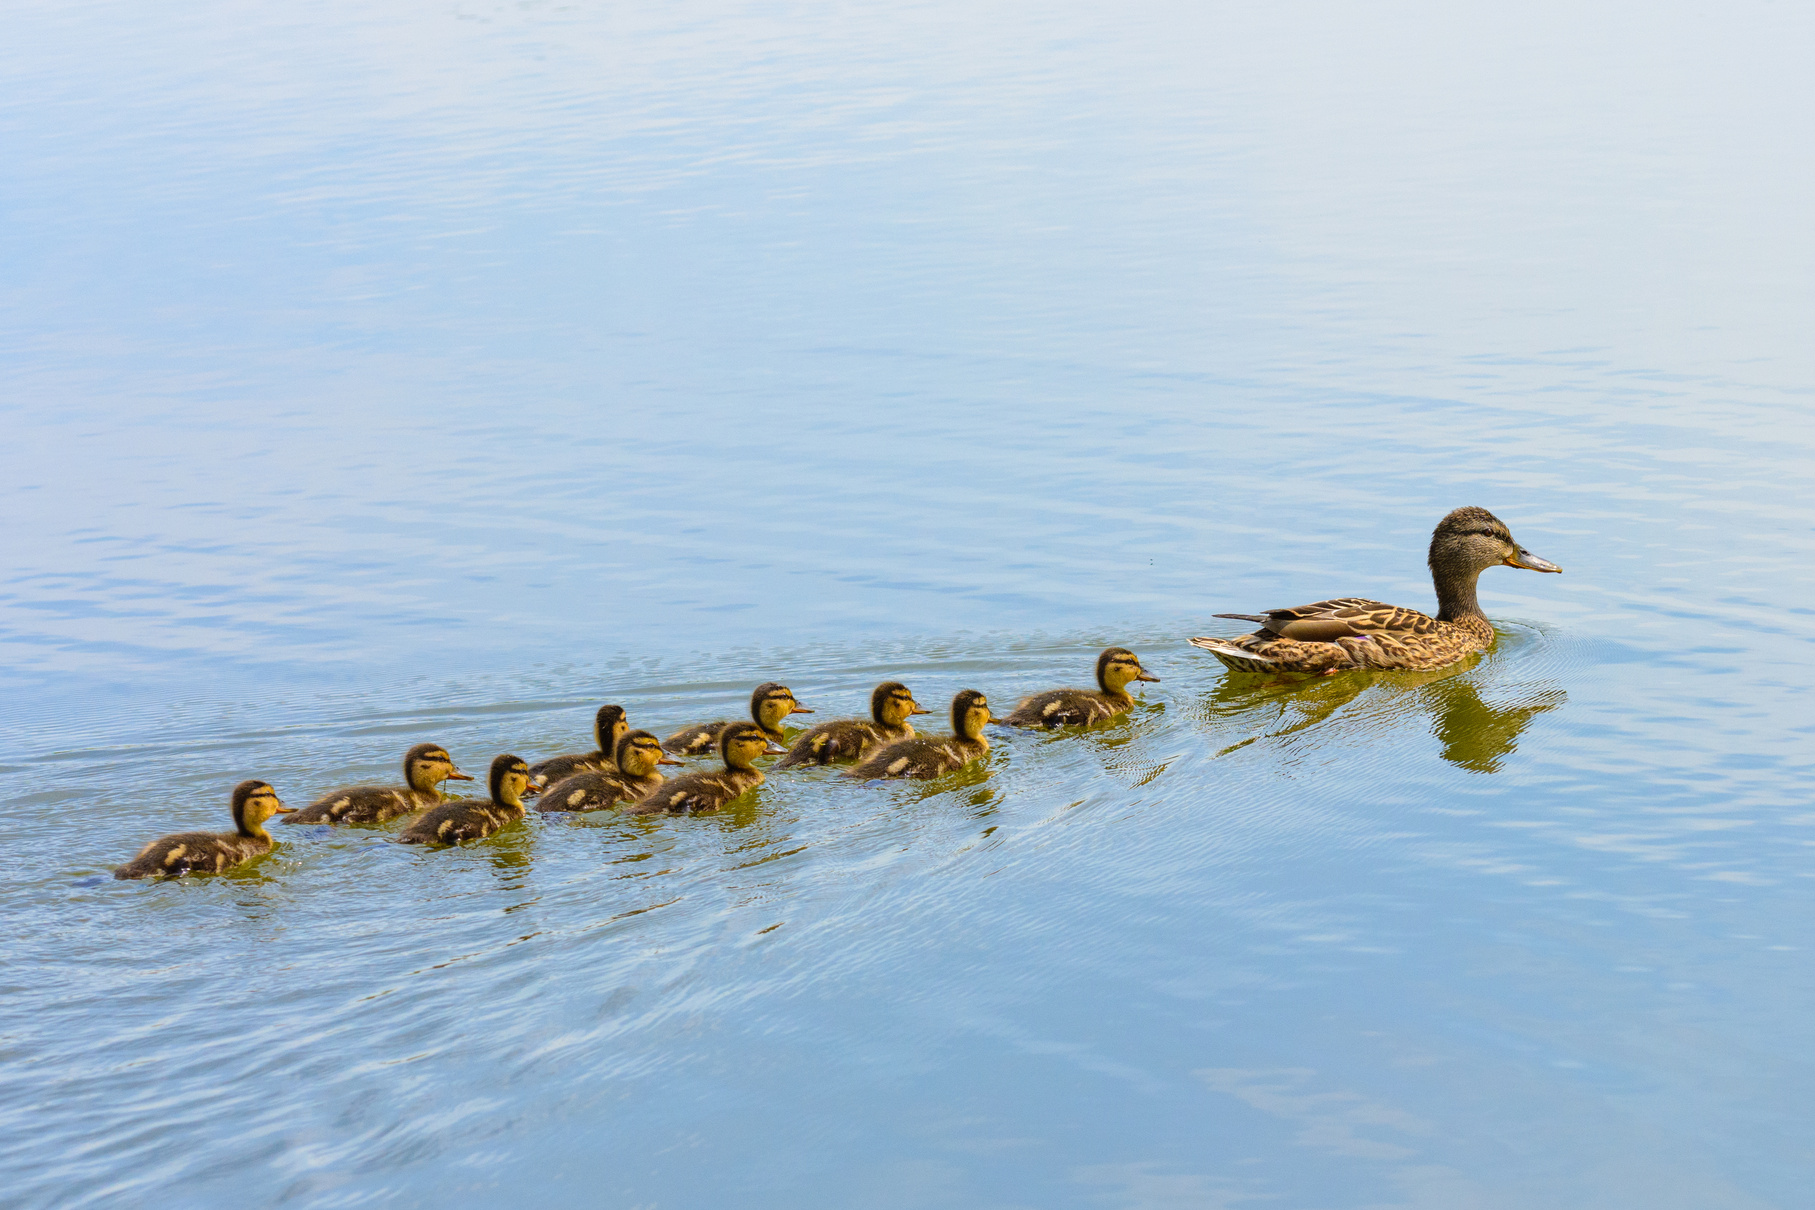 Ducks follow me, cute ducklings (duck babies) following mother in a queue